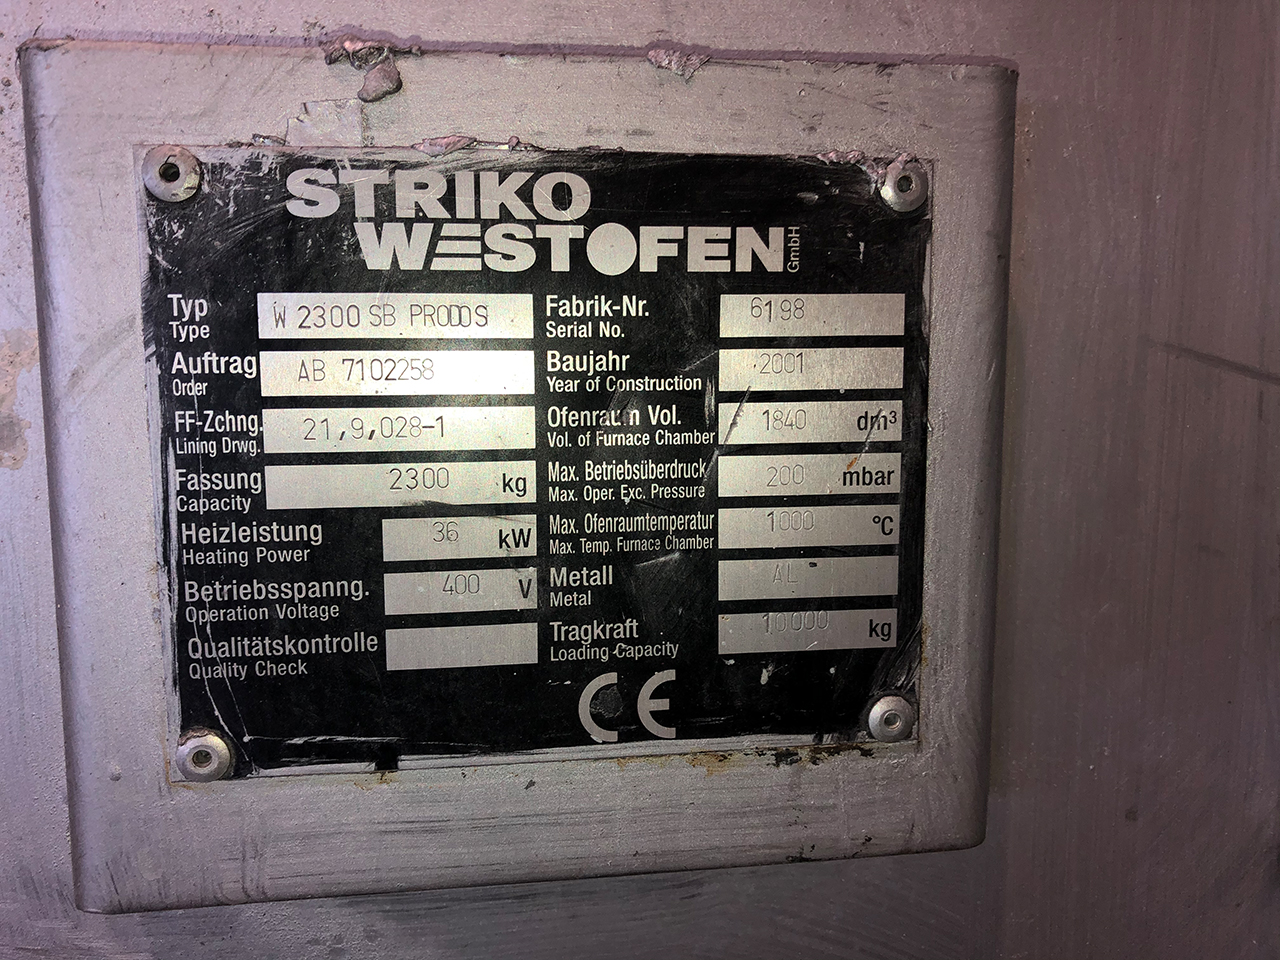 StrikoWestofen W 2300 SB ProDos Dosing Furnace O1706, used